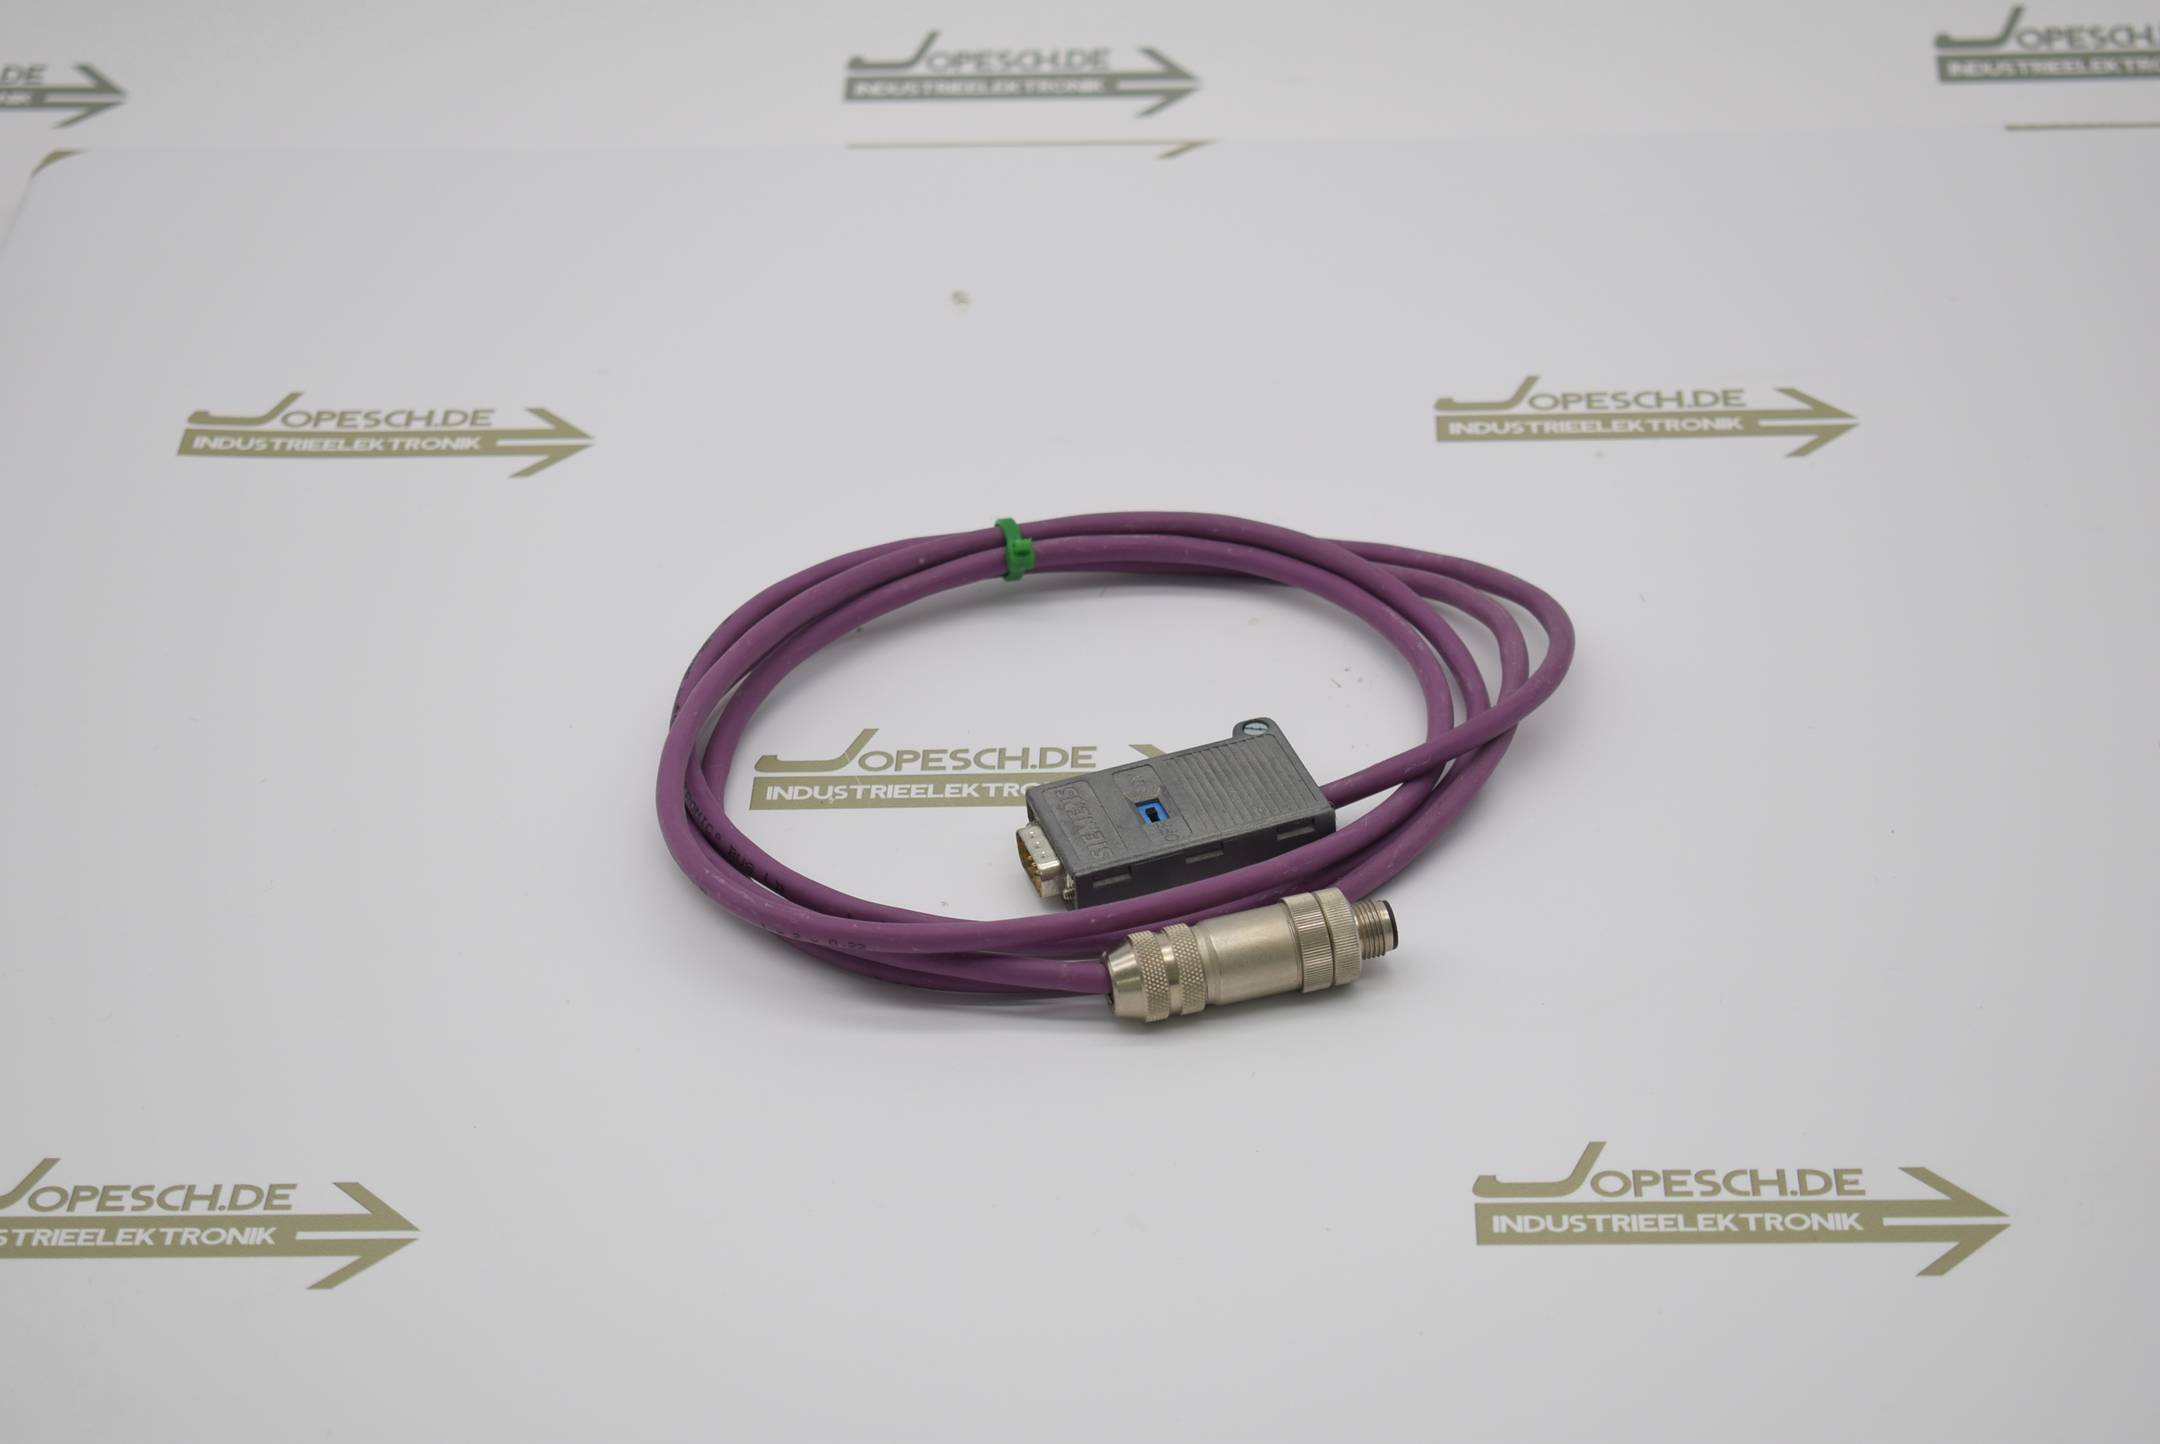 Siemens Profibus simatic OP inkl. Kabel 6GK1500-0EA02 ( 6GK1 500-0EA02 ) E. 01